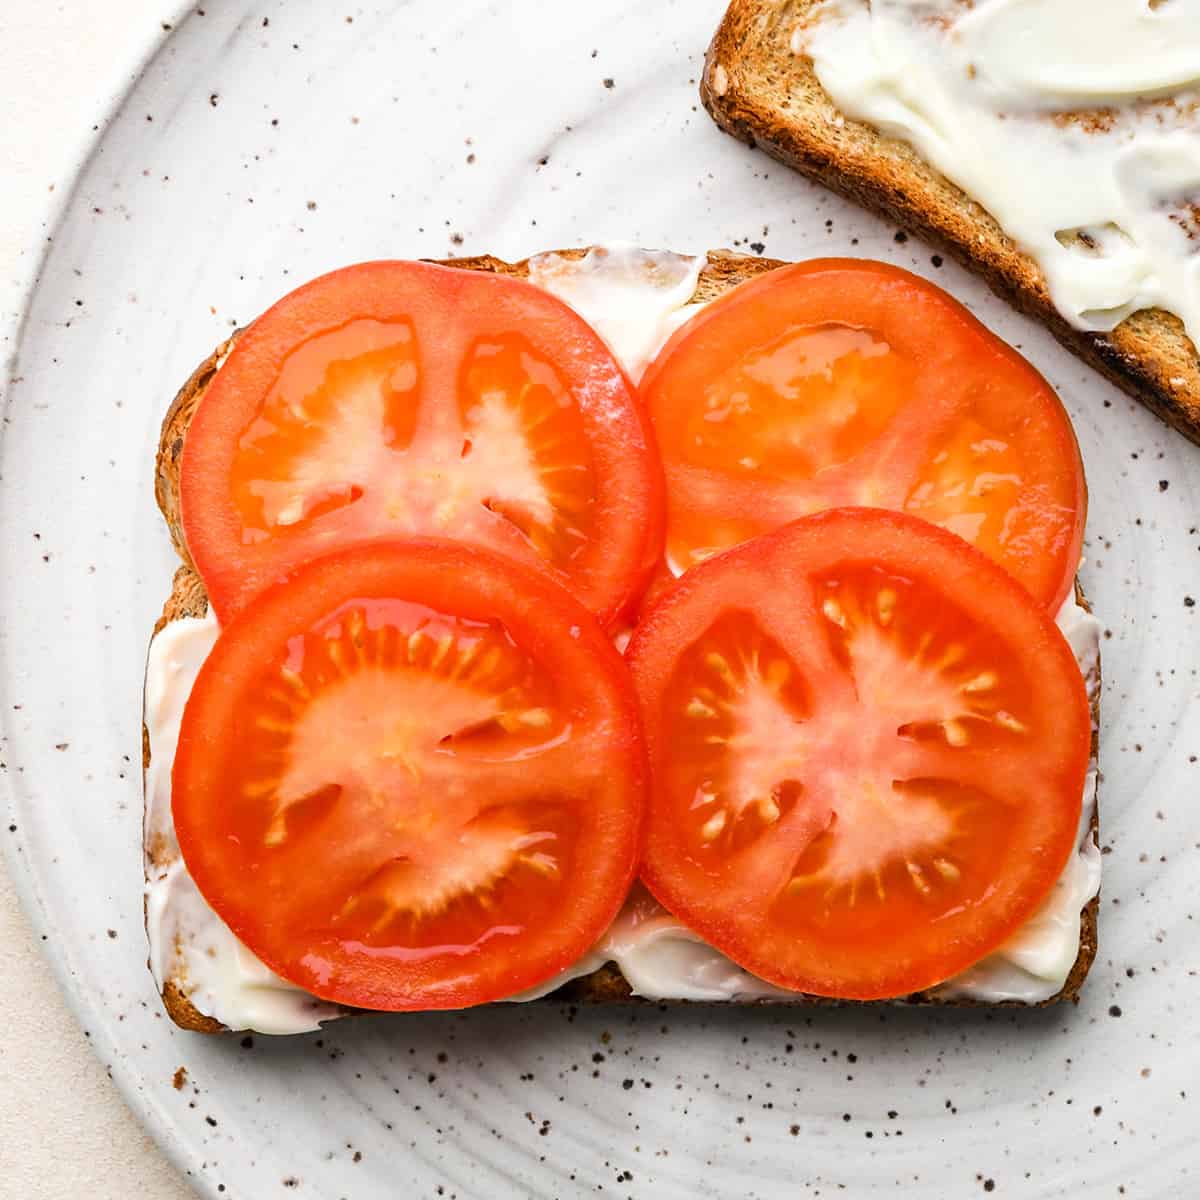 assembling a BLT sandwich - adding tomato